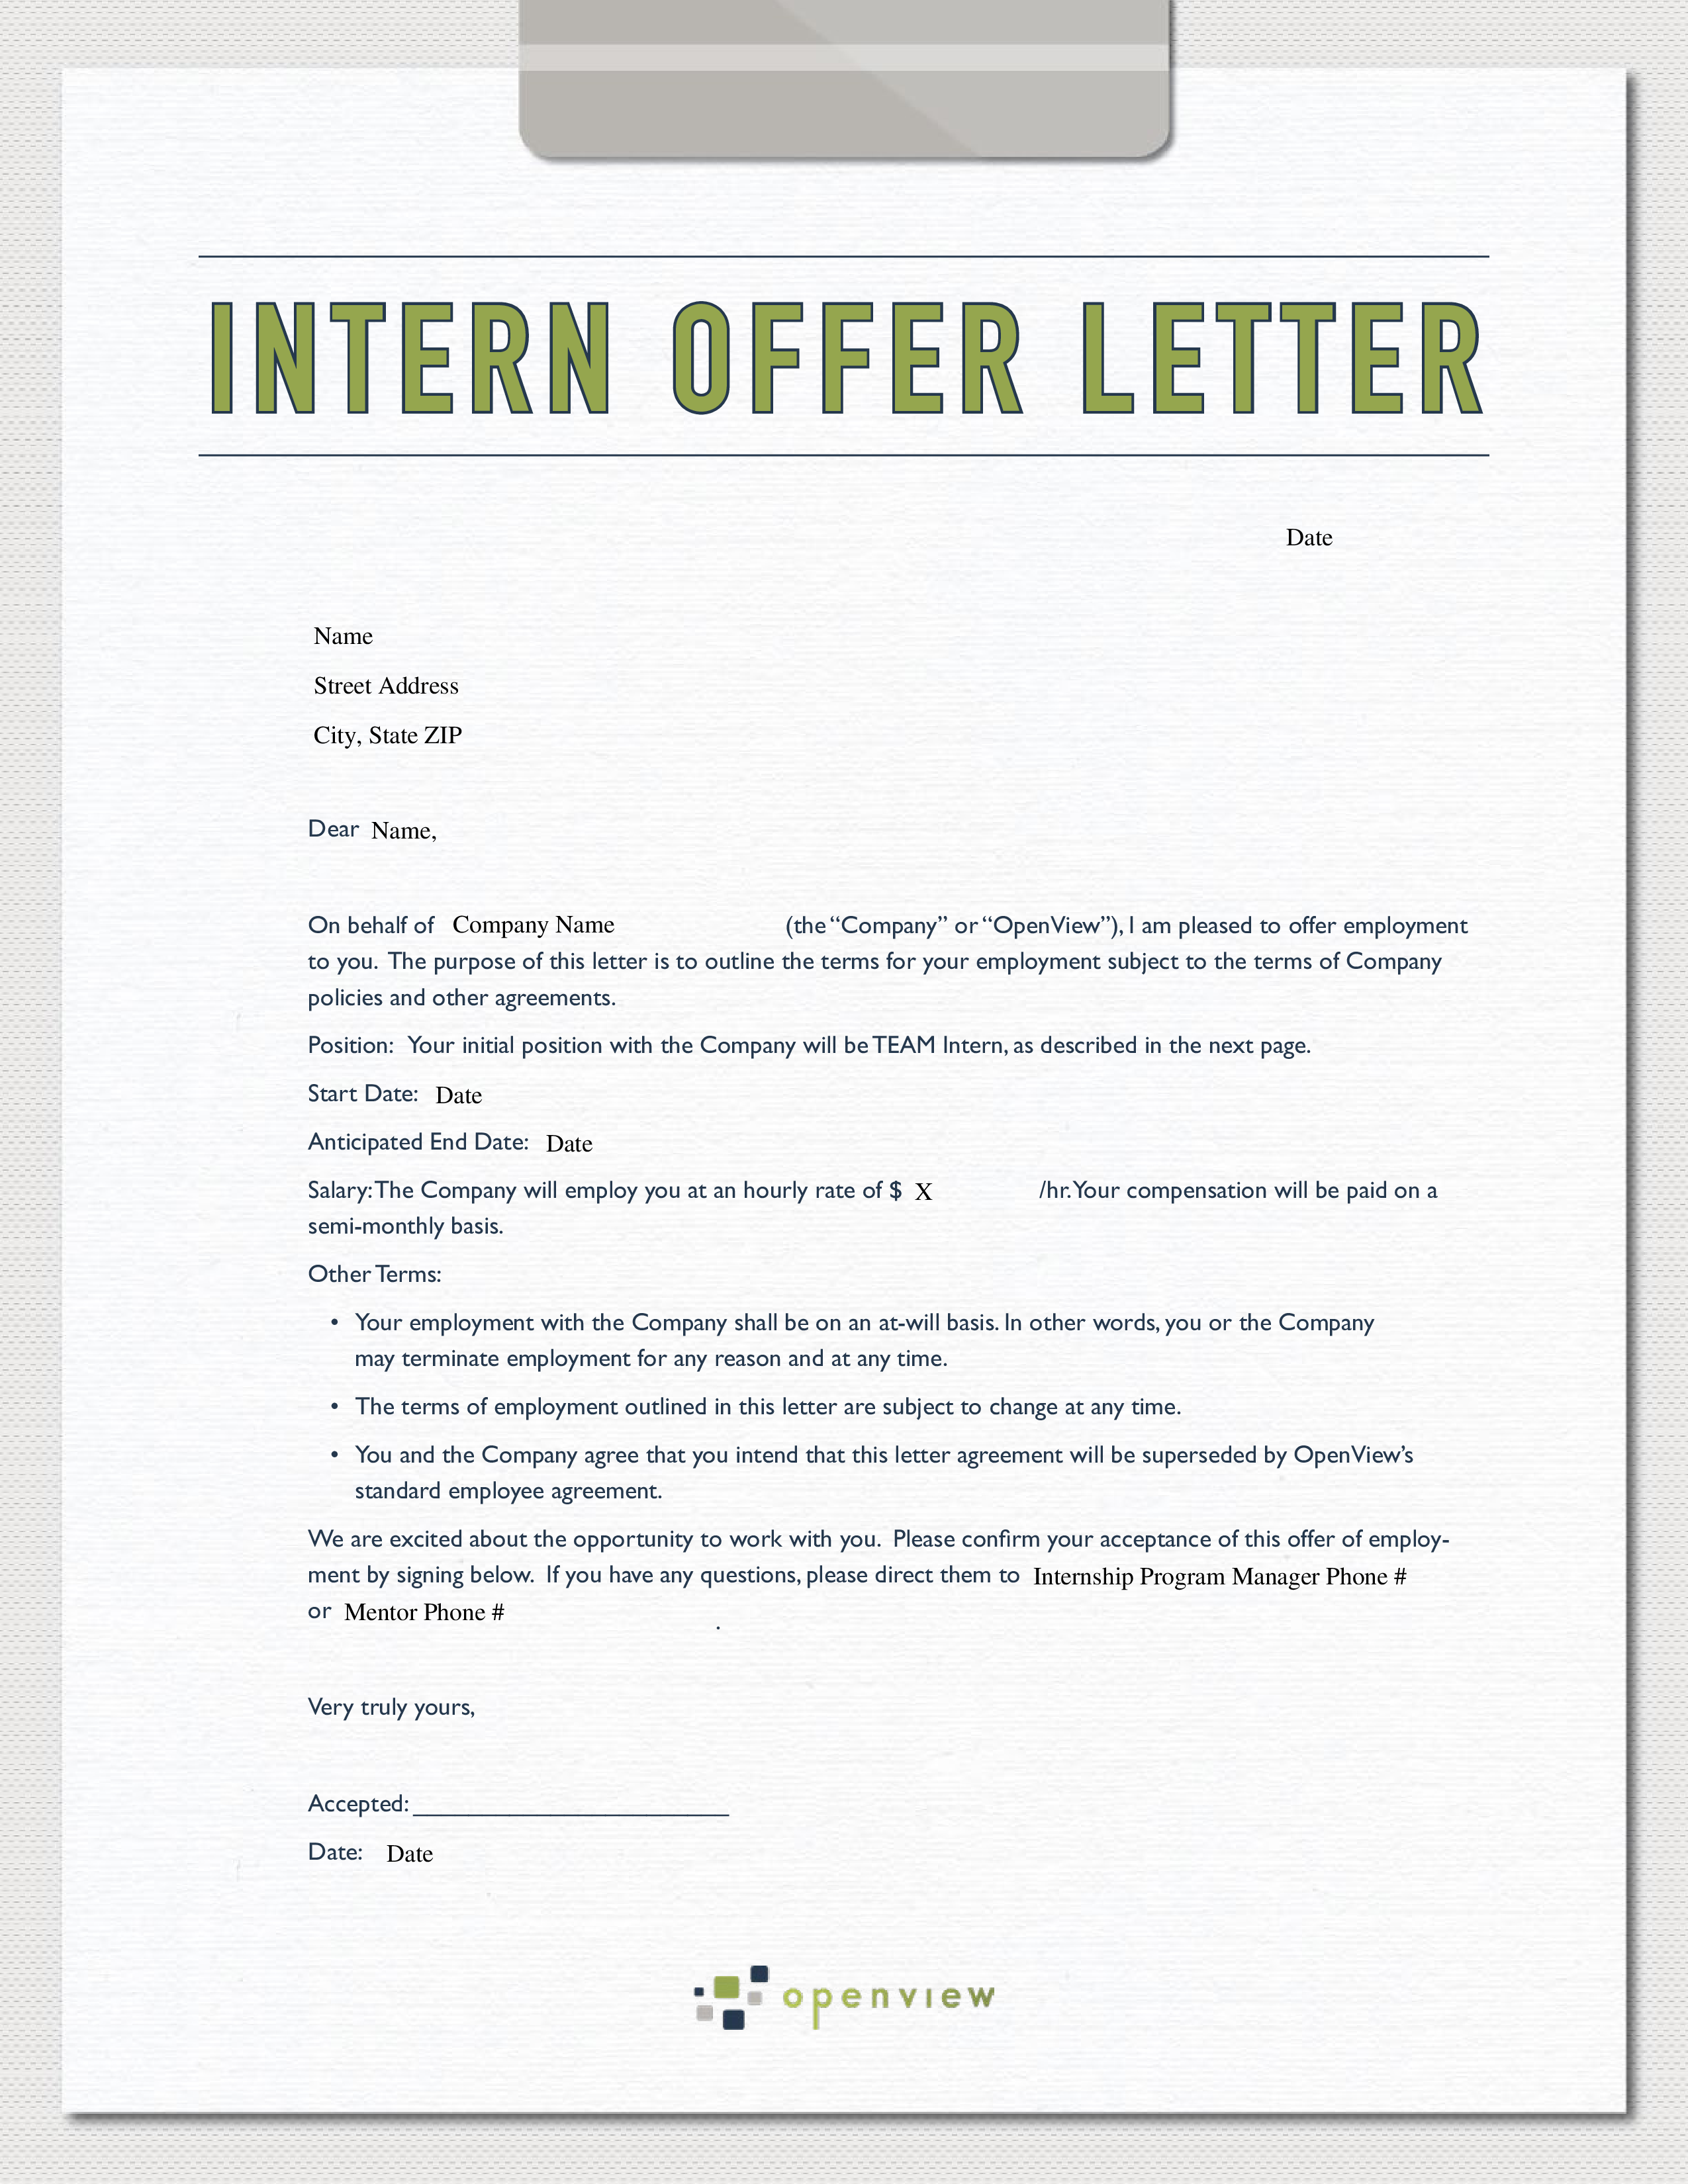 Sample Marketing Internship Offer Letter main image